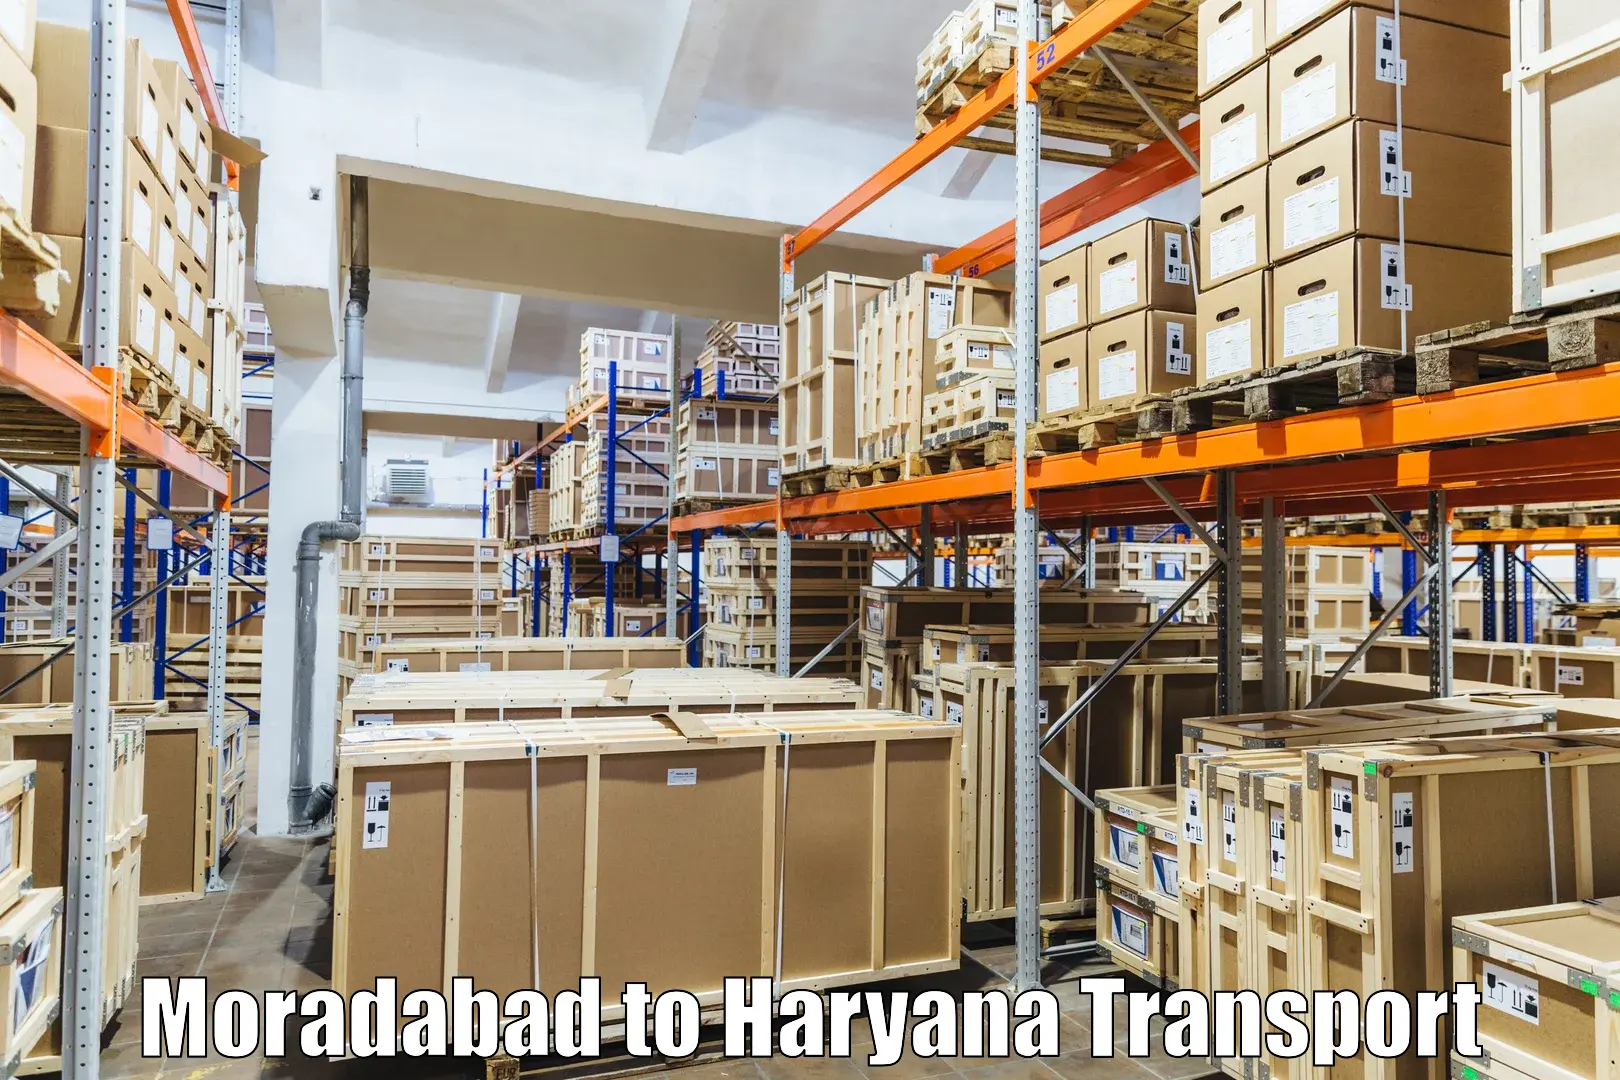 Transport in sharing Moradabad to Panipat